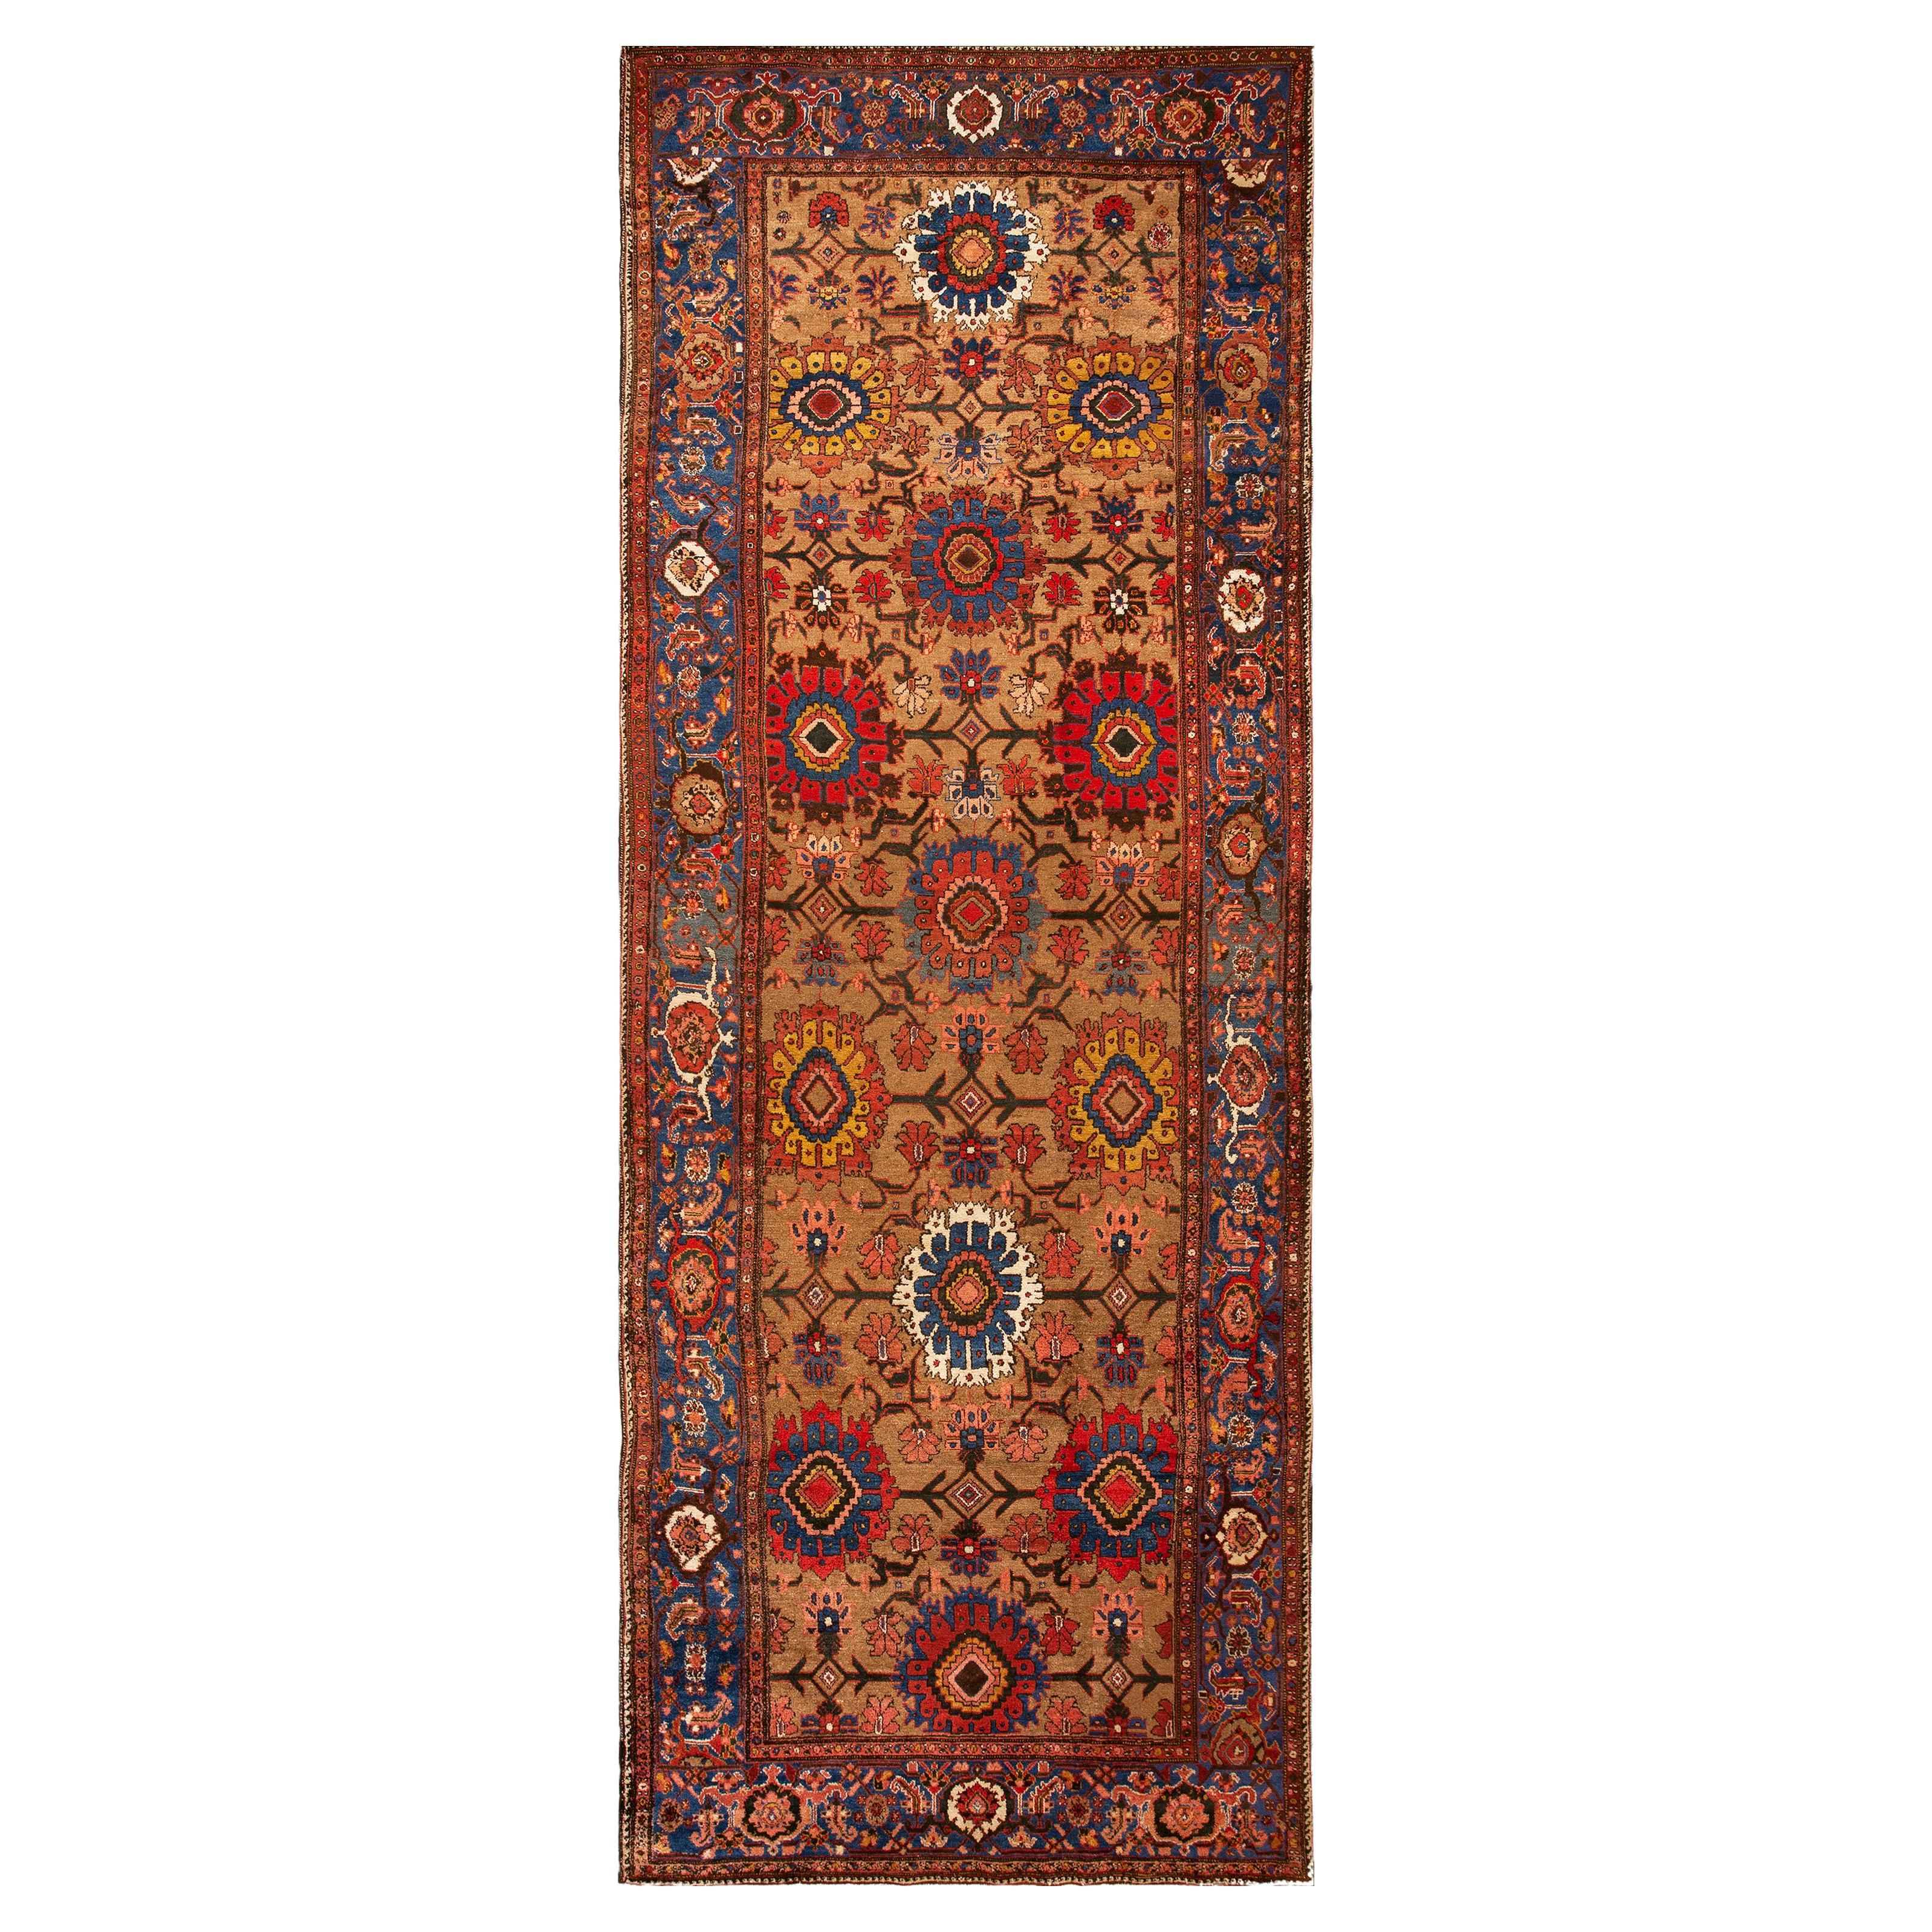 Late 19th Century Persian Bakhtiari Gallery Carpet (6'2" x 16'8" - 188 x 508 ) For Sale